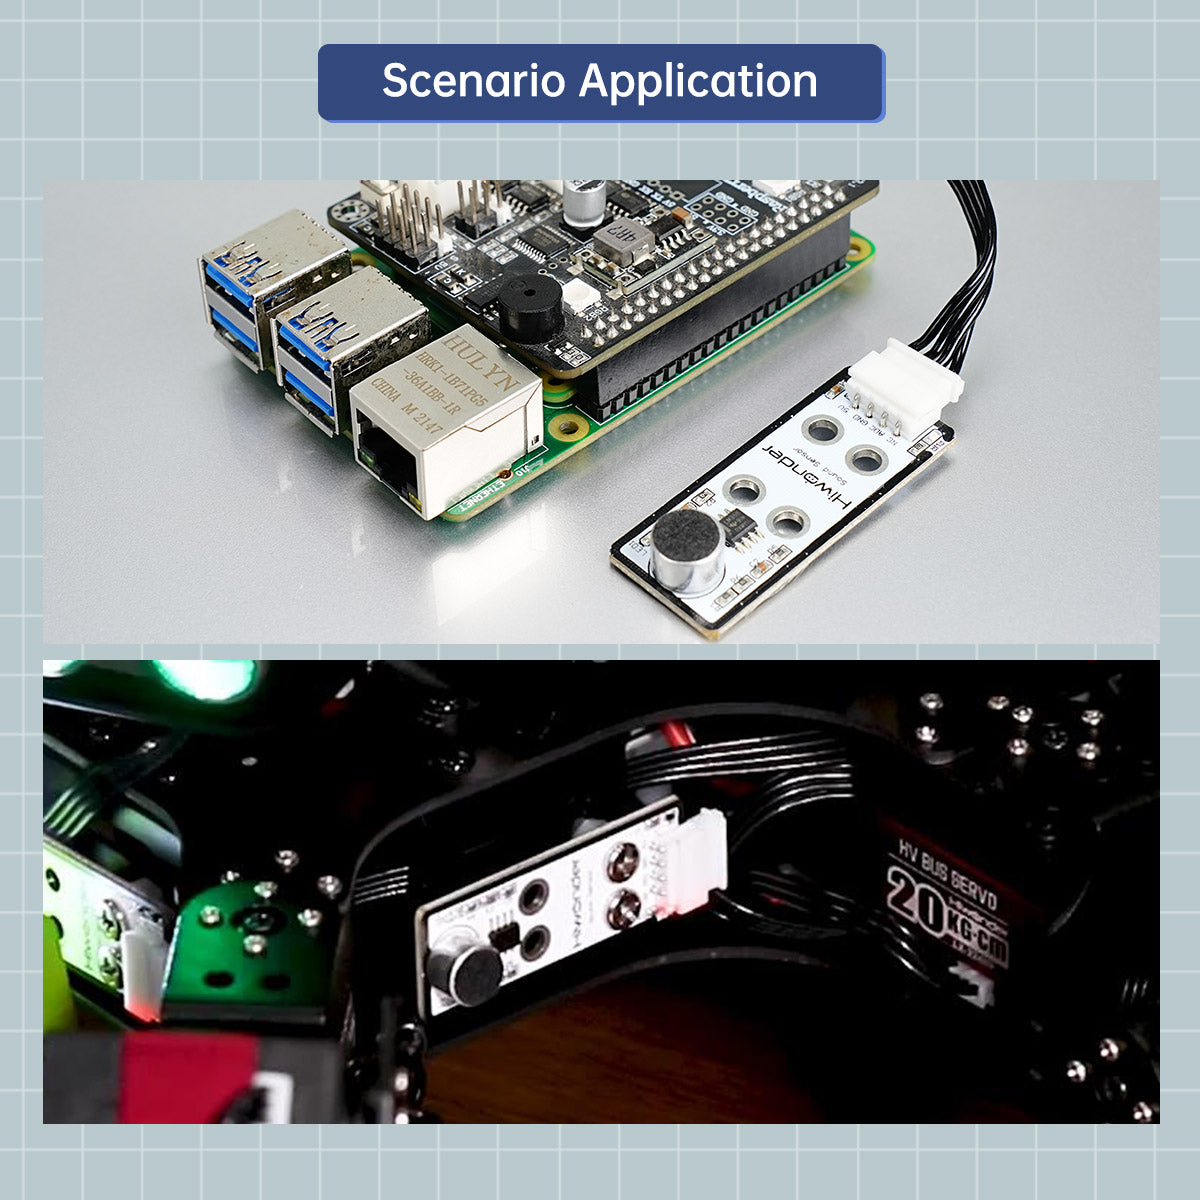 Sound Sensor: Hiwonder Robot Sensor Compatible with Arduino